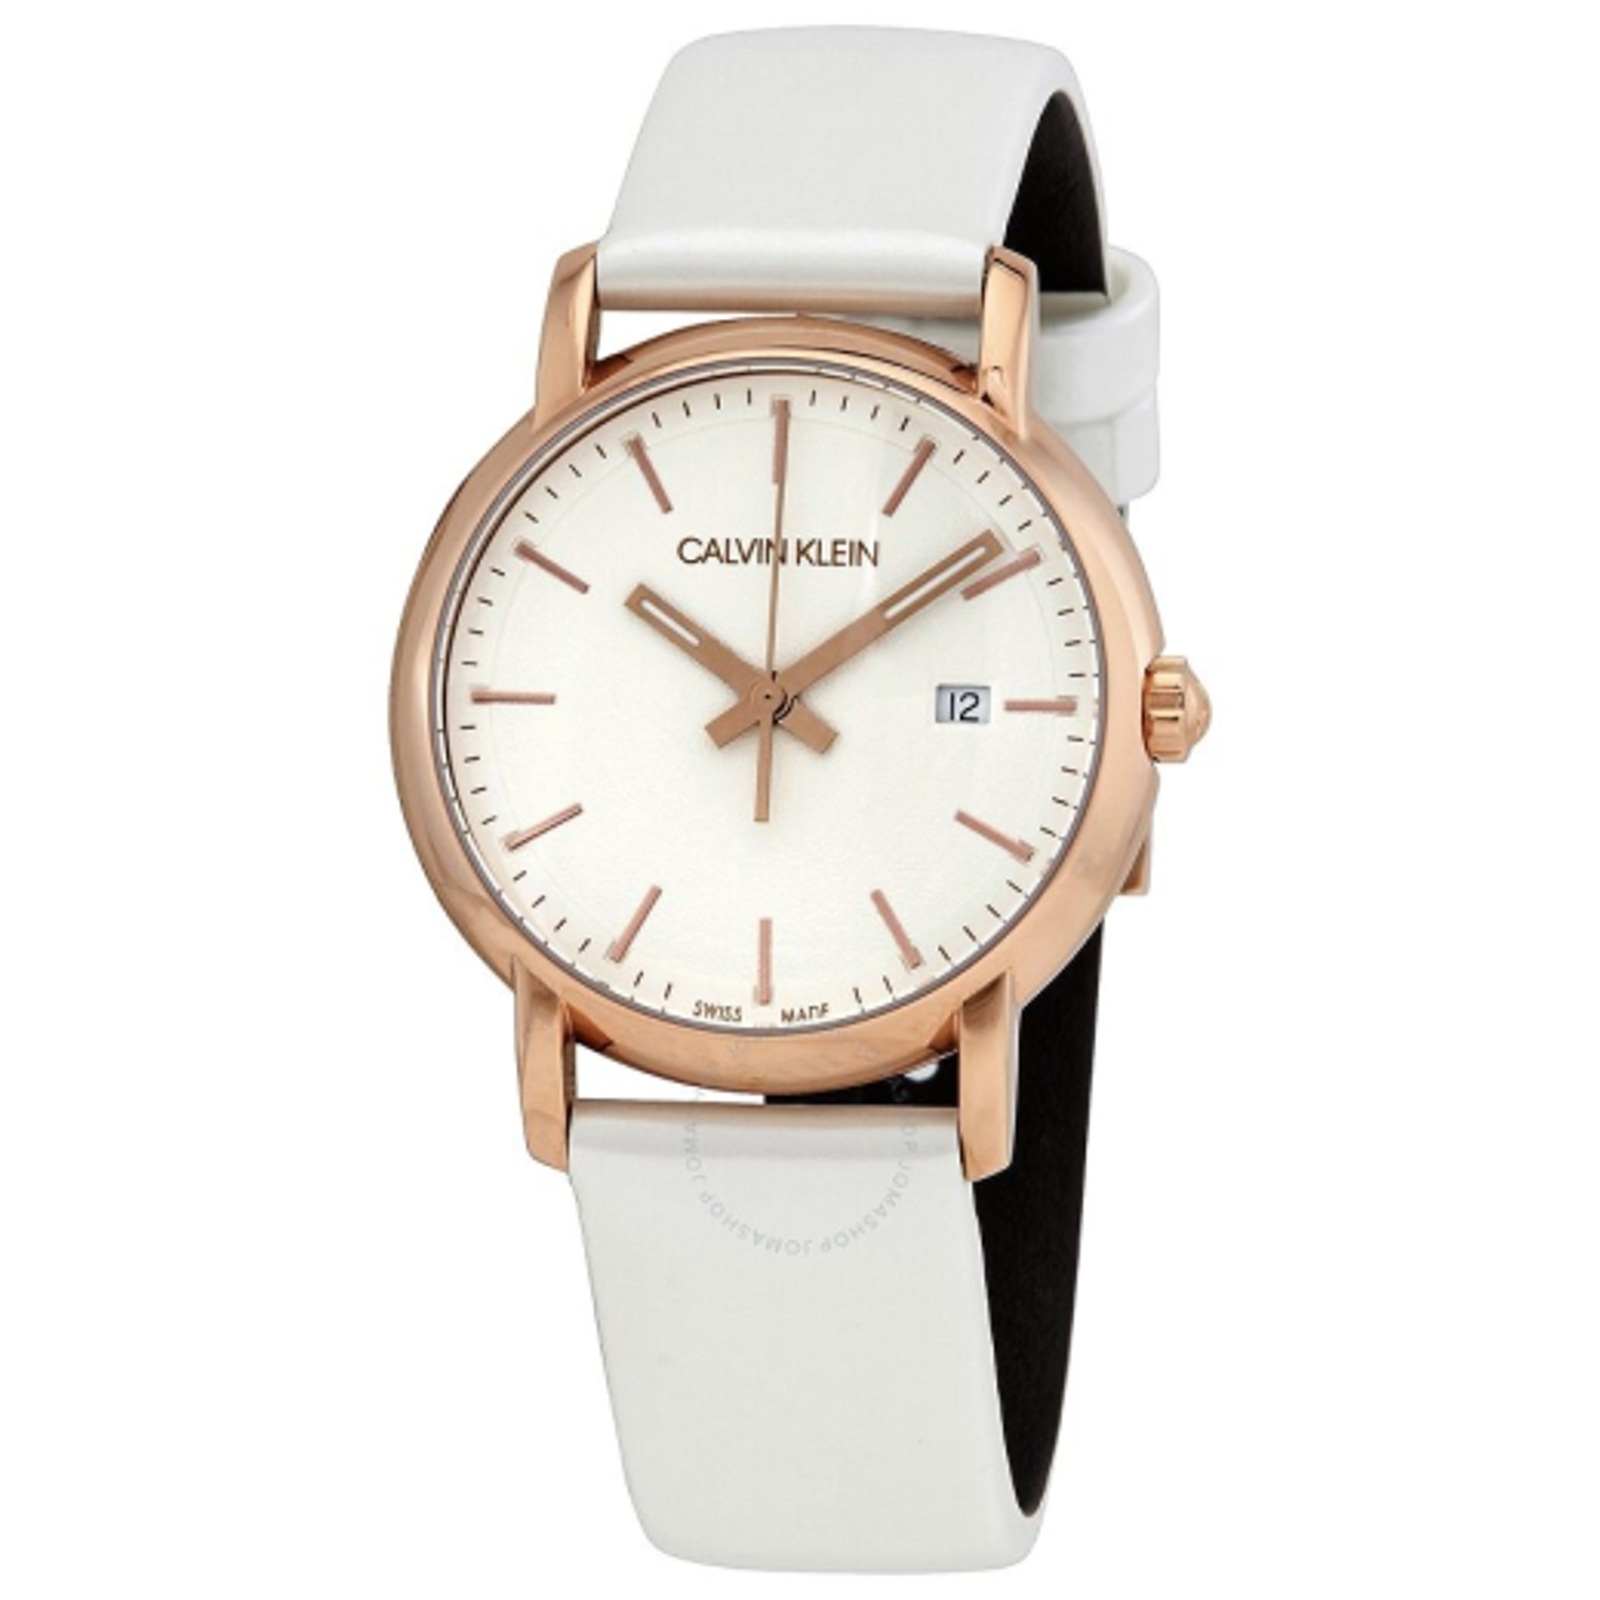 Calvin Klein White Rose Tone Dial White Leather Watch - Mint by Baldwins